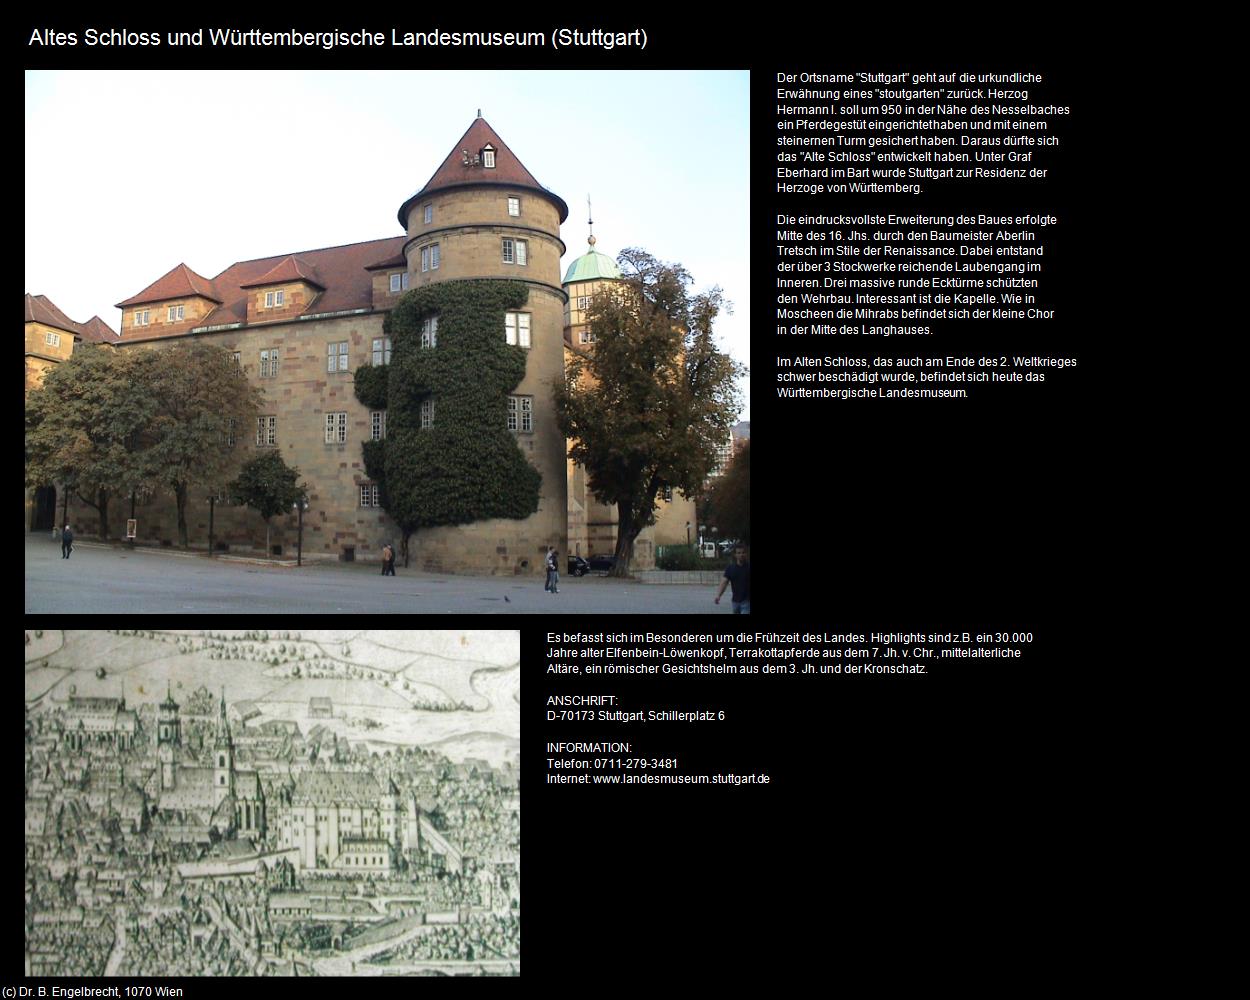 Altes Schloss und Württembergische Landesmuseum (Stuttgart) in Kulturatlas-BADEN-WÜRTTEMBERG